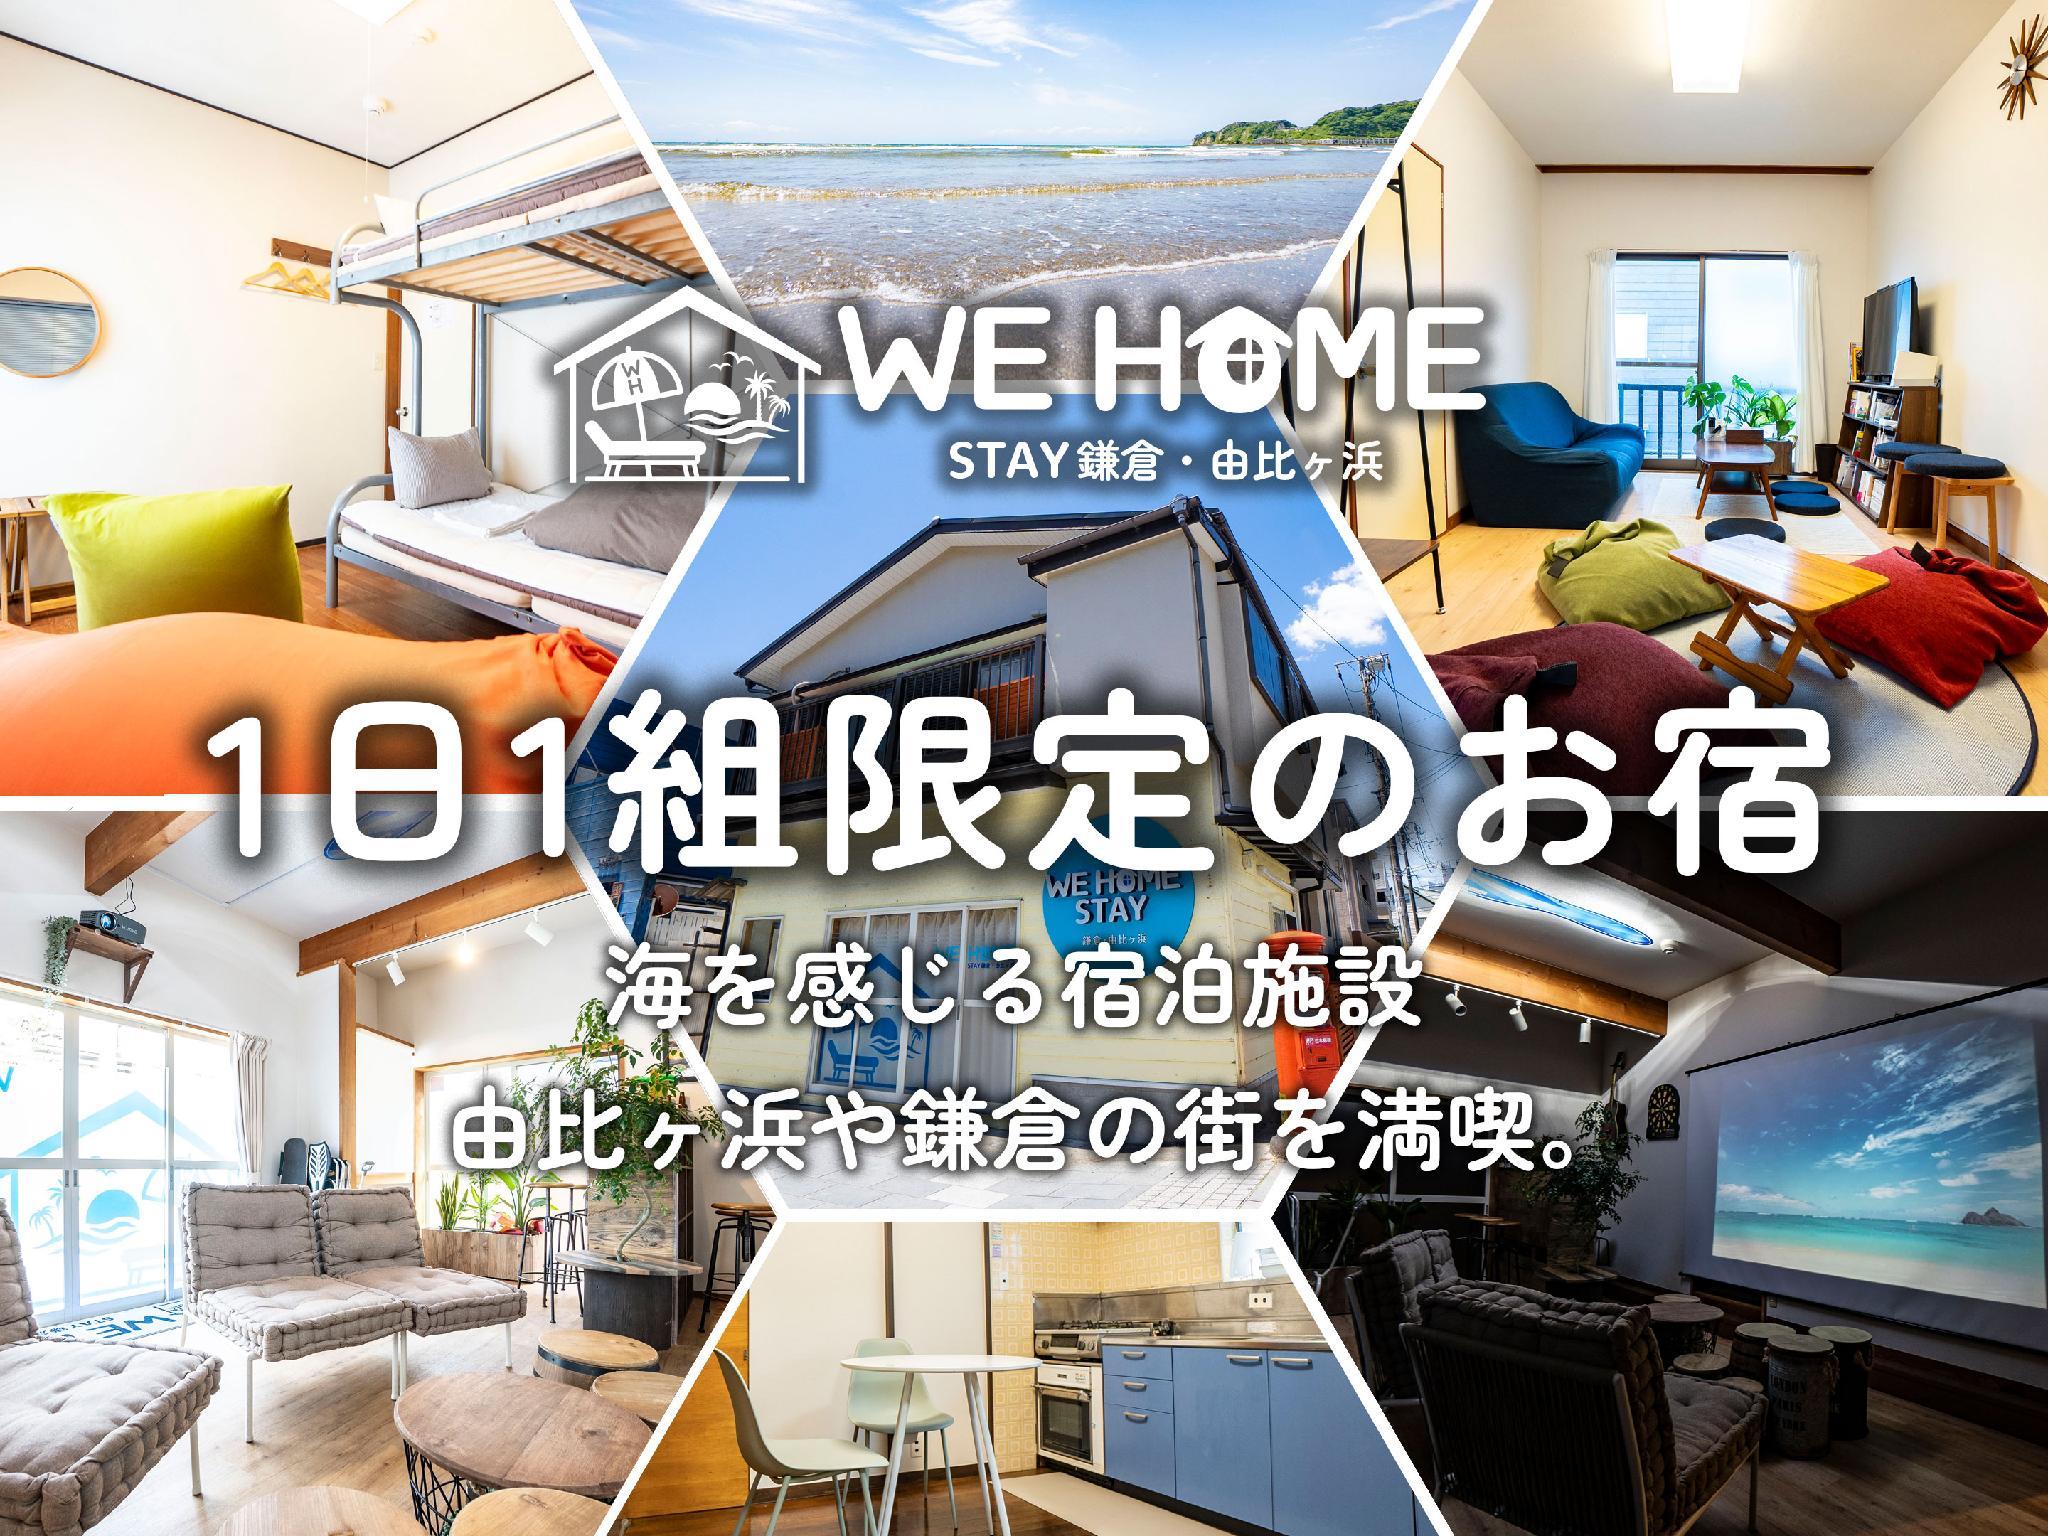 We Home Stay 鎌倉・由比ガ浜 - 鎌倉市